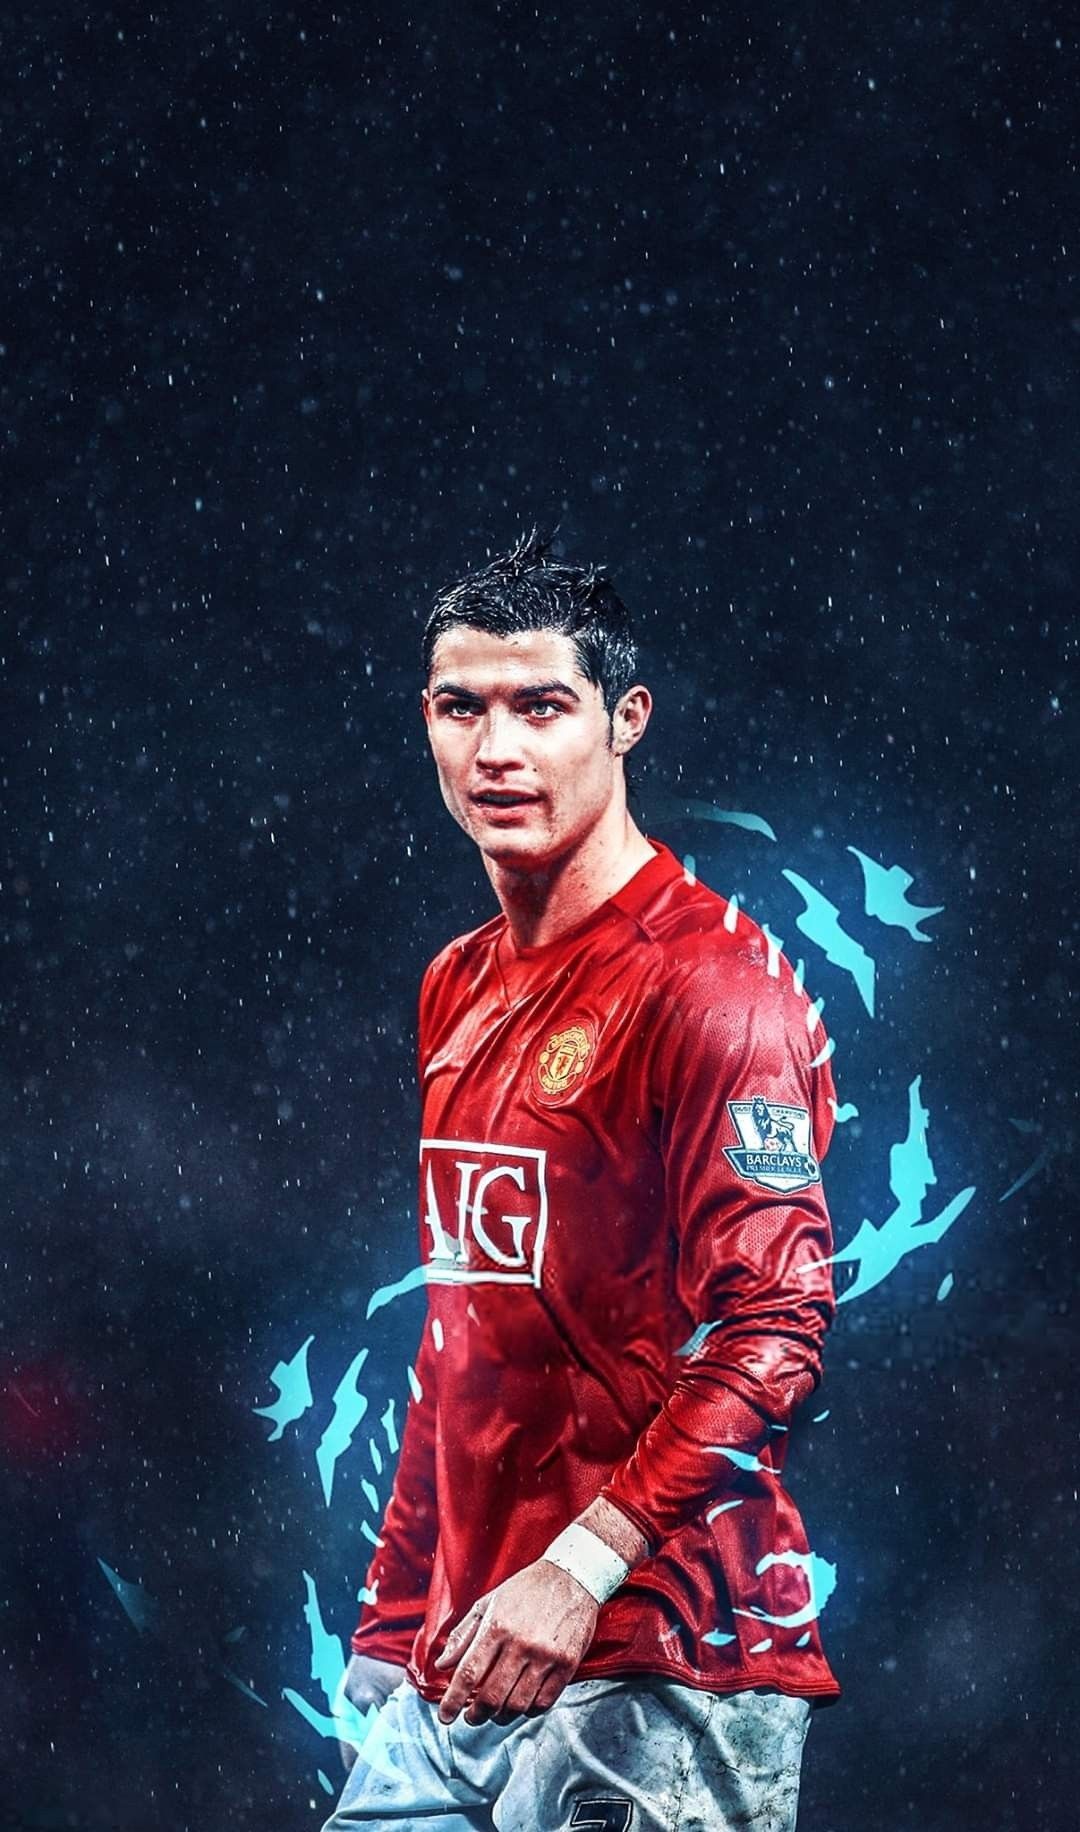 Cristiano Ronaldo Manchester United 2021 Background Image and Wallpaper